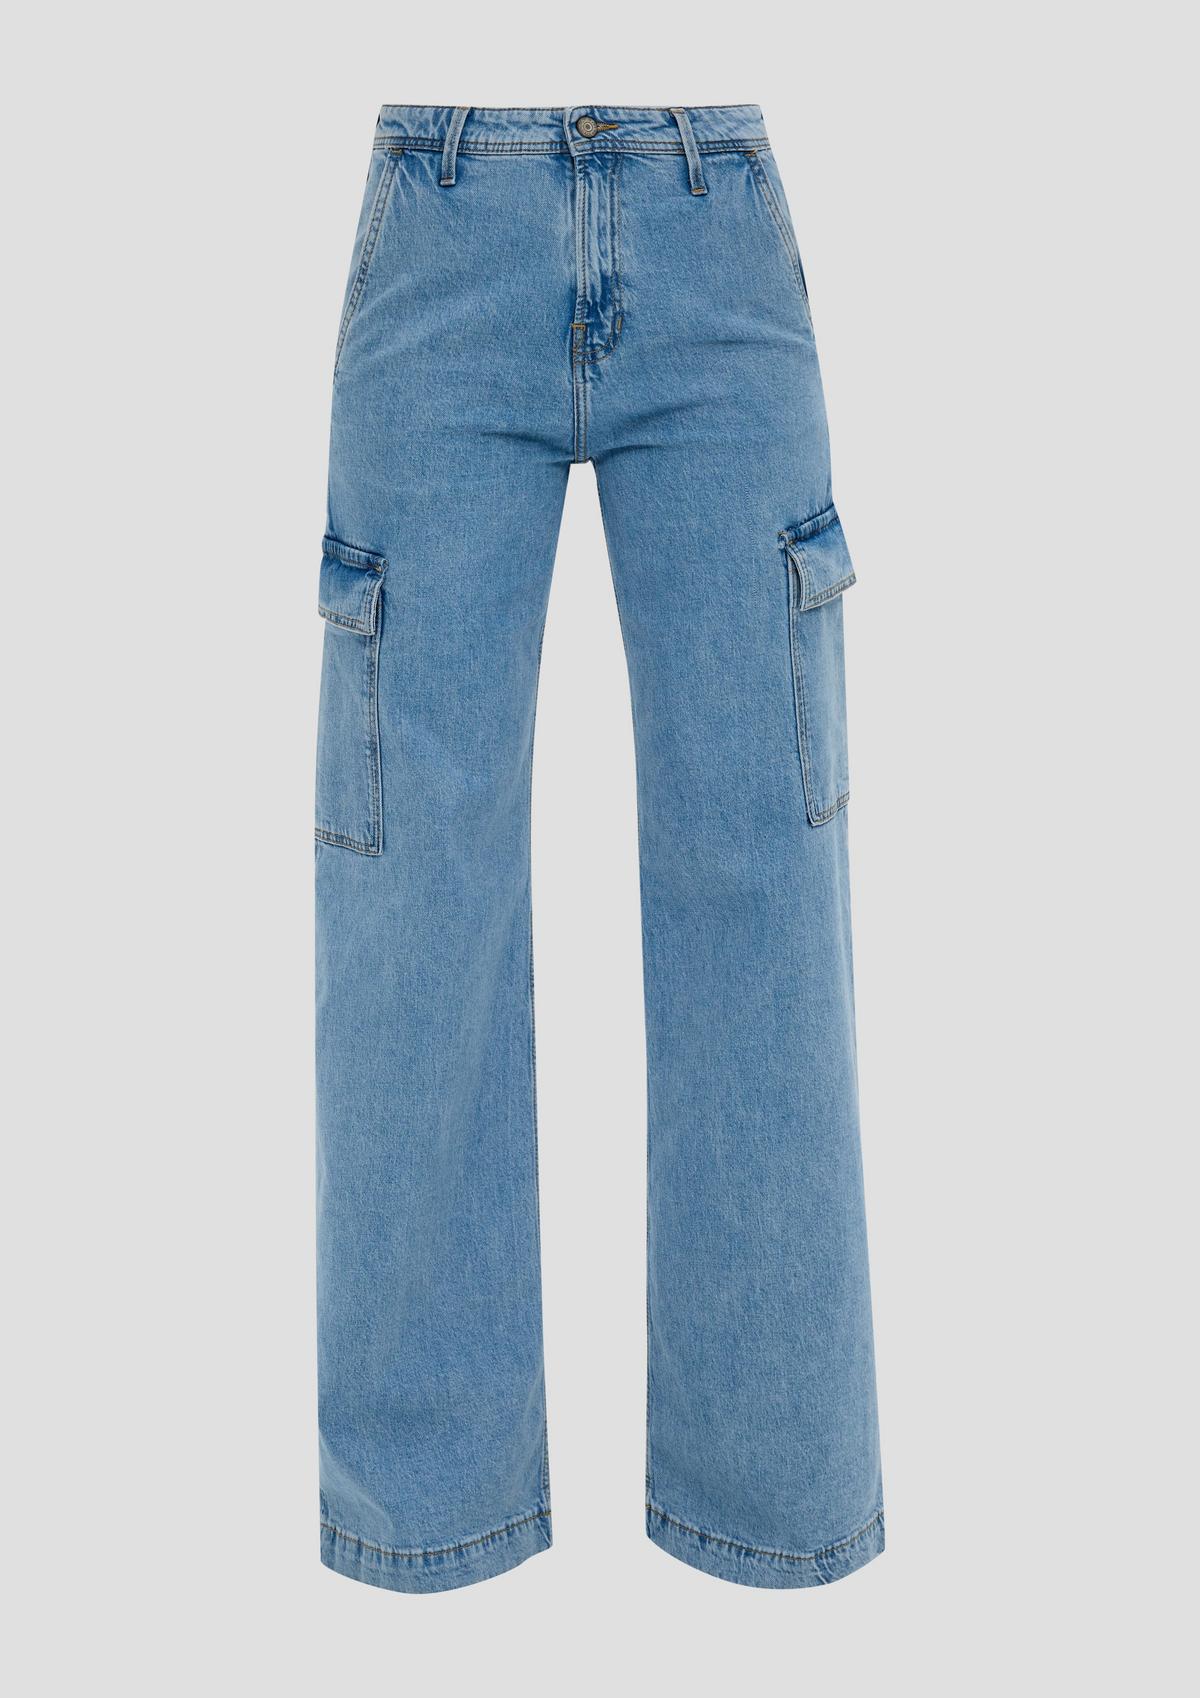 s.Oliver Suri jeans / mid rise / wide leg / cargo pockets